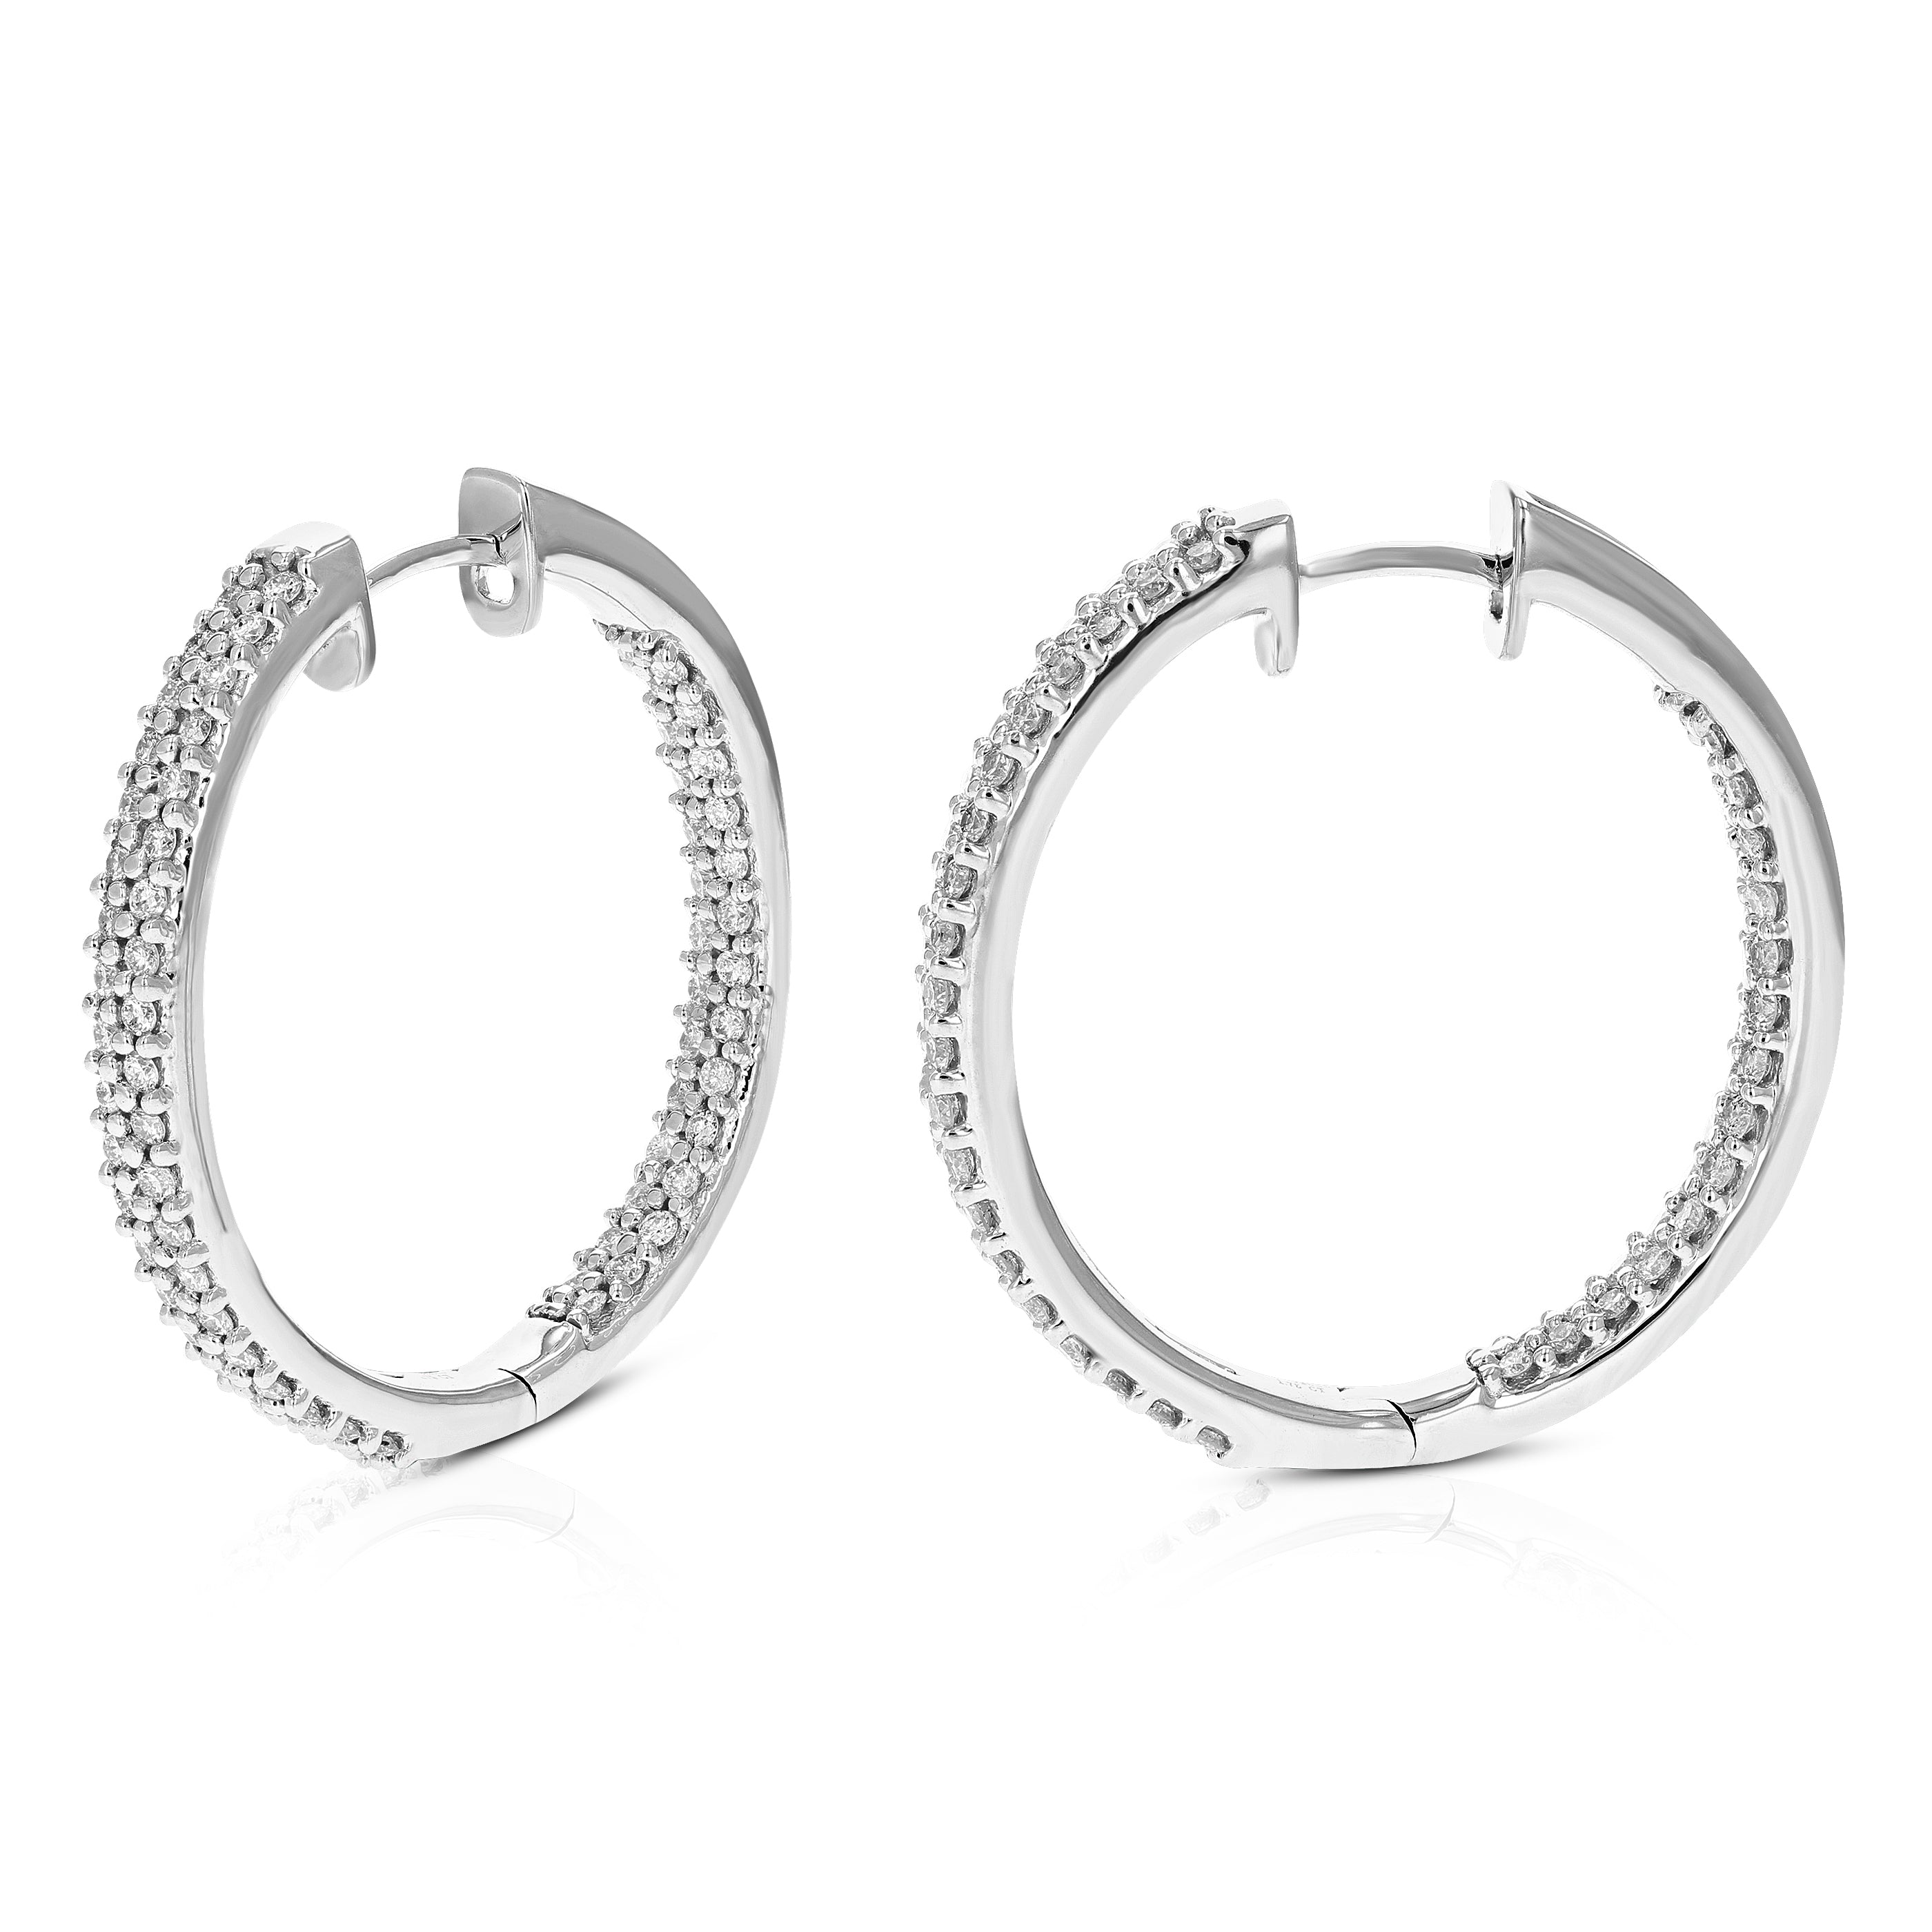 Inside Out Duble Row Diamond Earrings